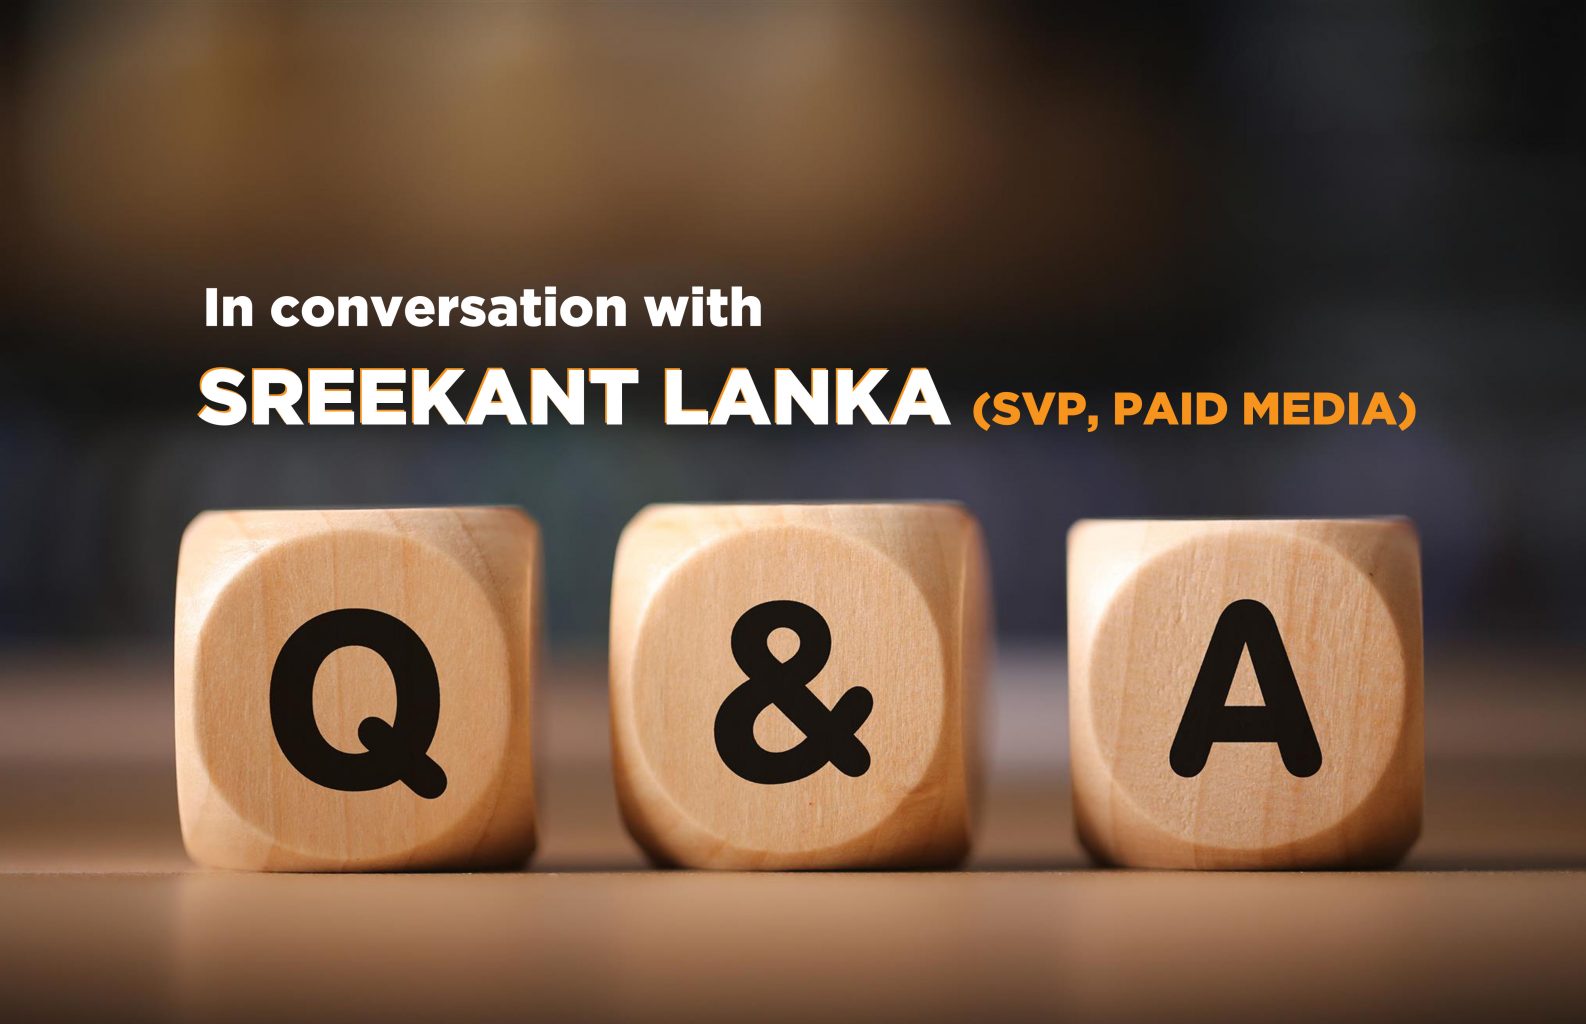 Q&A - In conversation with Sreekant Lanka - iQuanti Digital Marketing Company